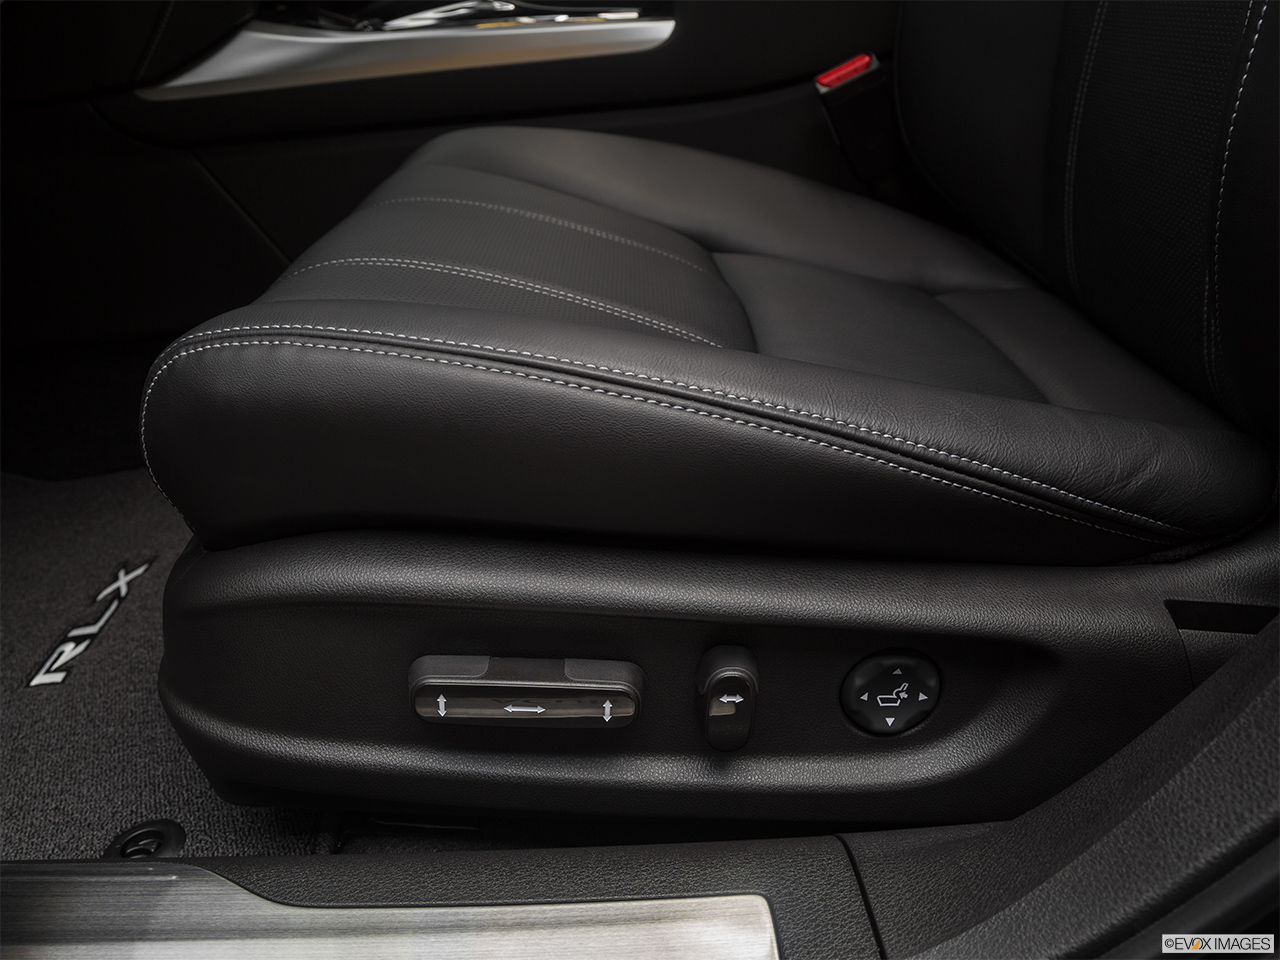 2020 Acura RLX Sport Hybrid SH-AWD Seat Adjustment Controllers. 